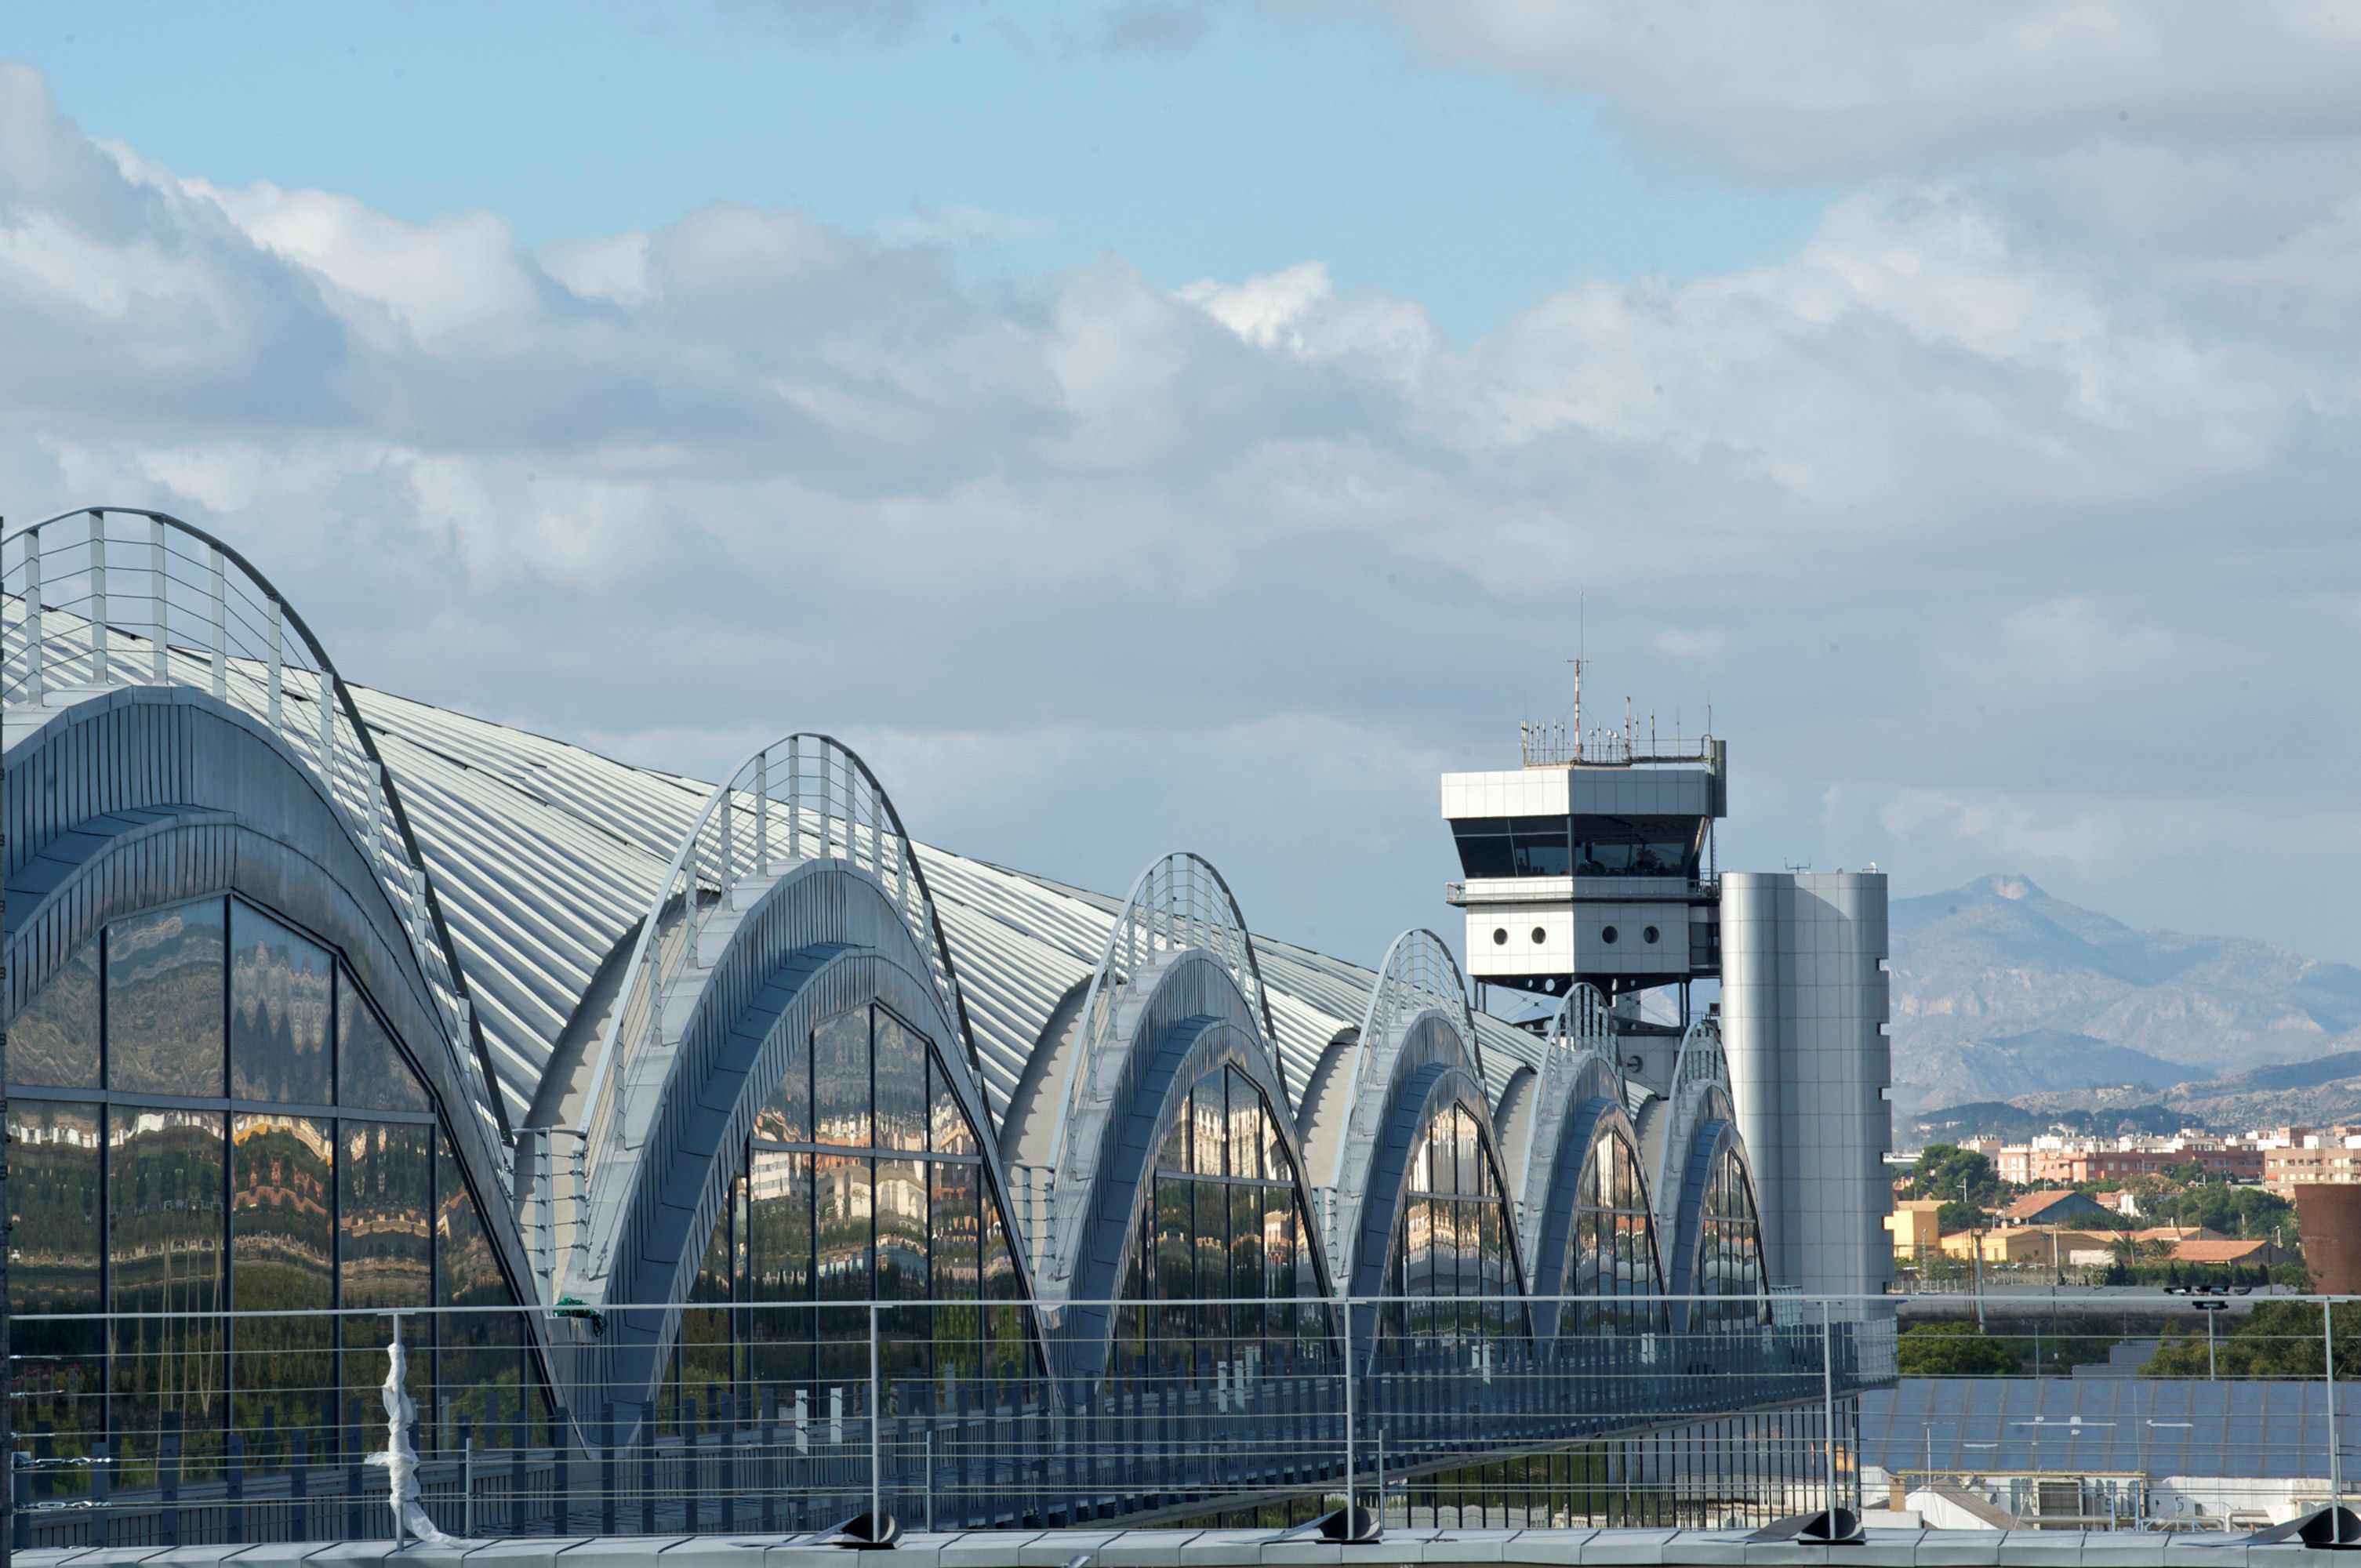 Alicante Airport's terminal